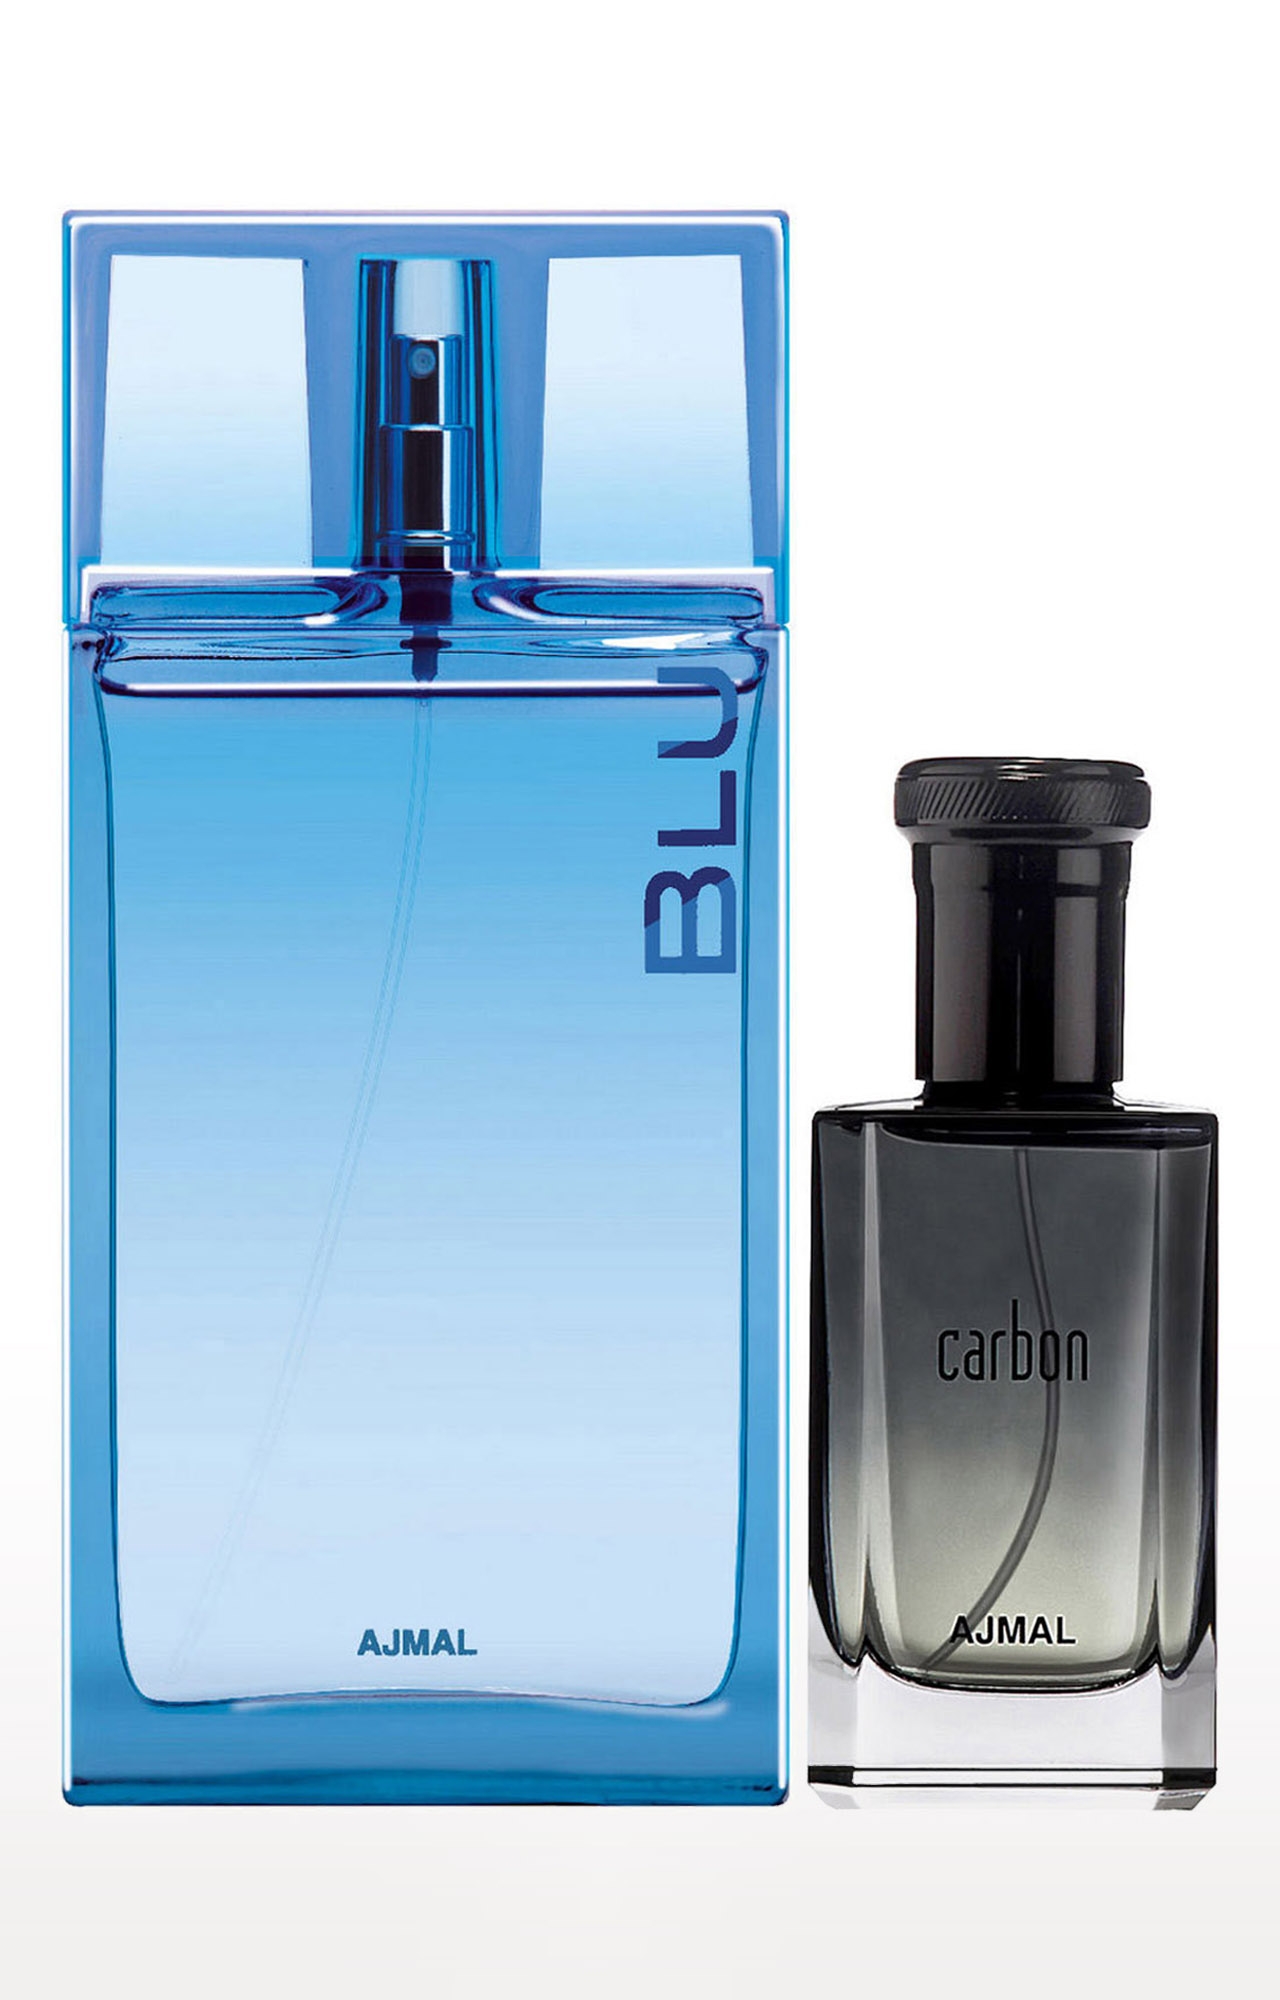 Ajmal Blu EDP Aquatic Perfume 90ml for Men and Carbon EDP Perfume 100ml for Men